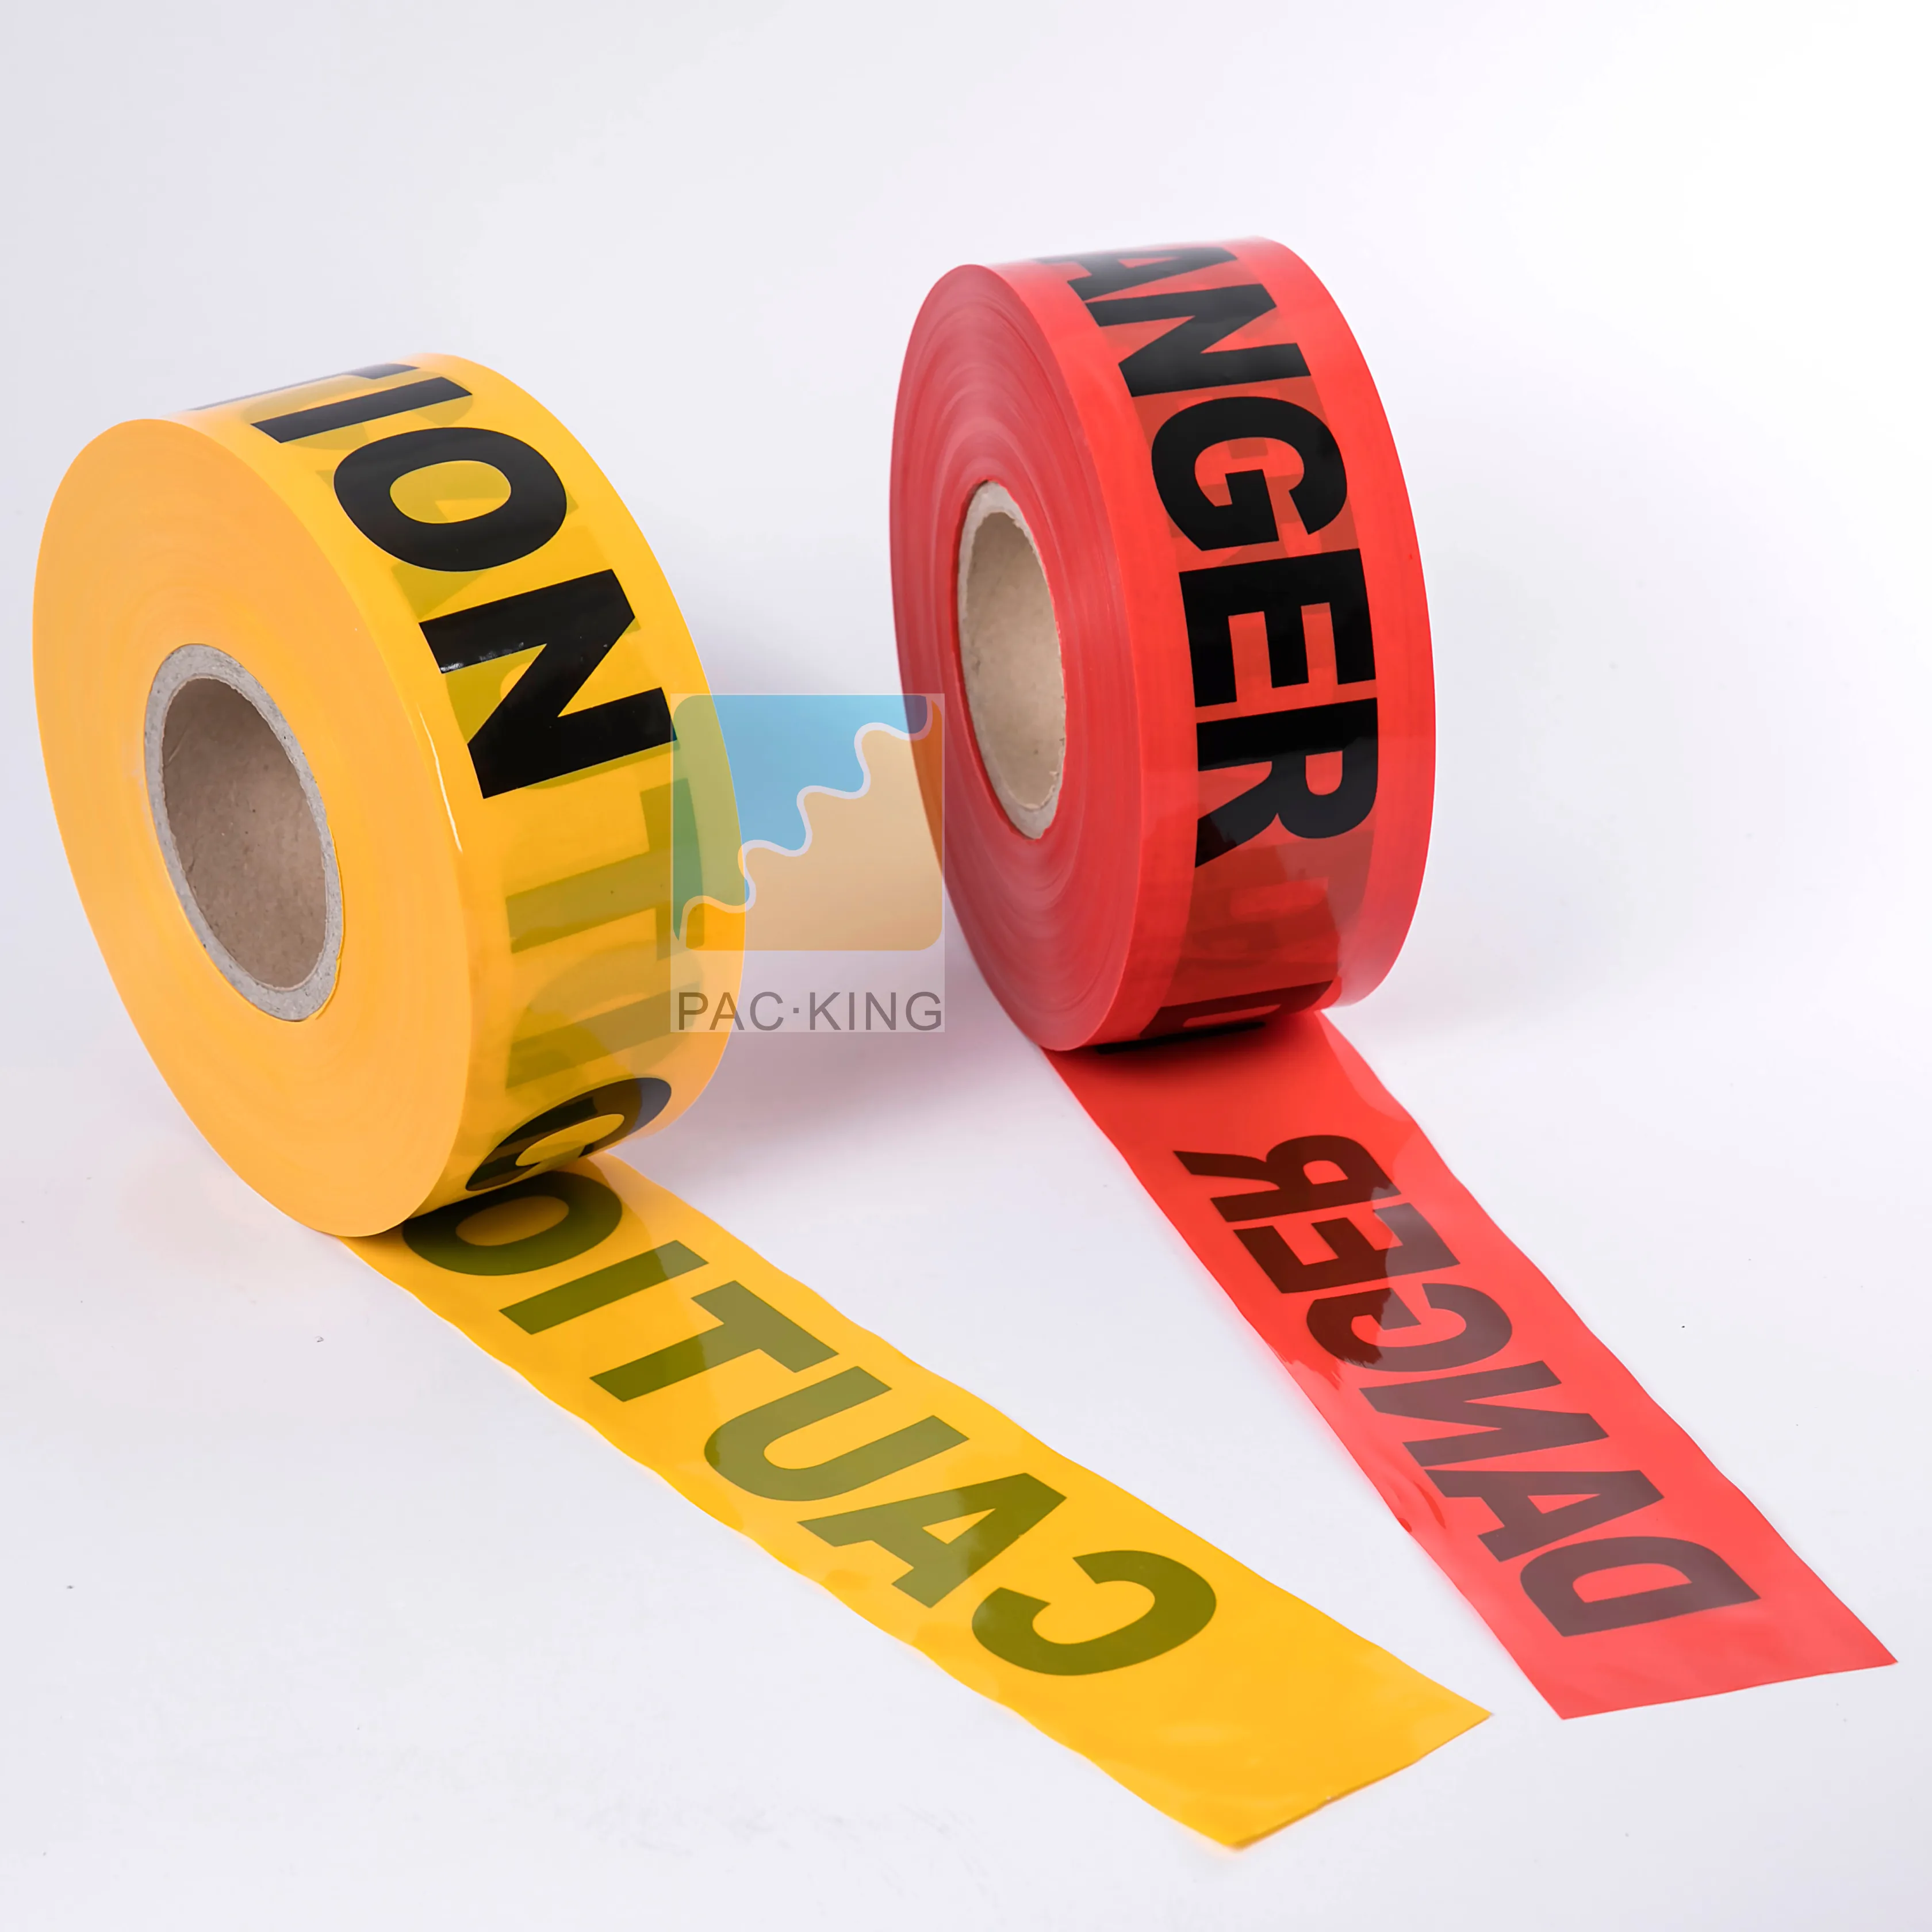 pe warning tape price barricade safety tape yellow caution tape